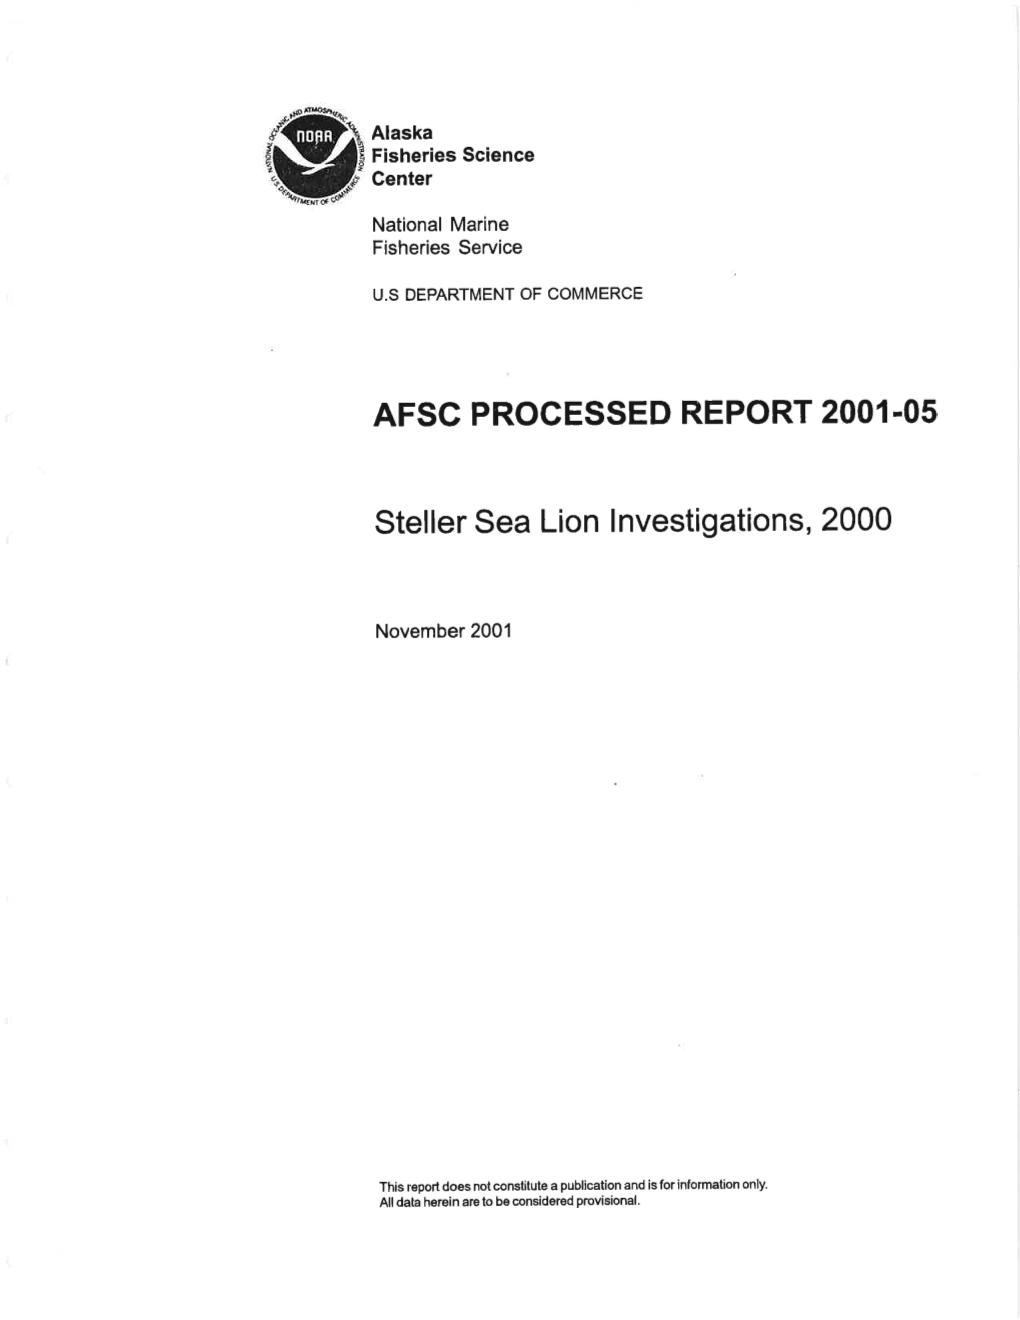 Steller Sea Lion Investigations, 2000